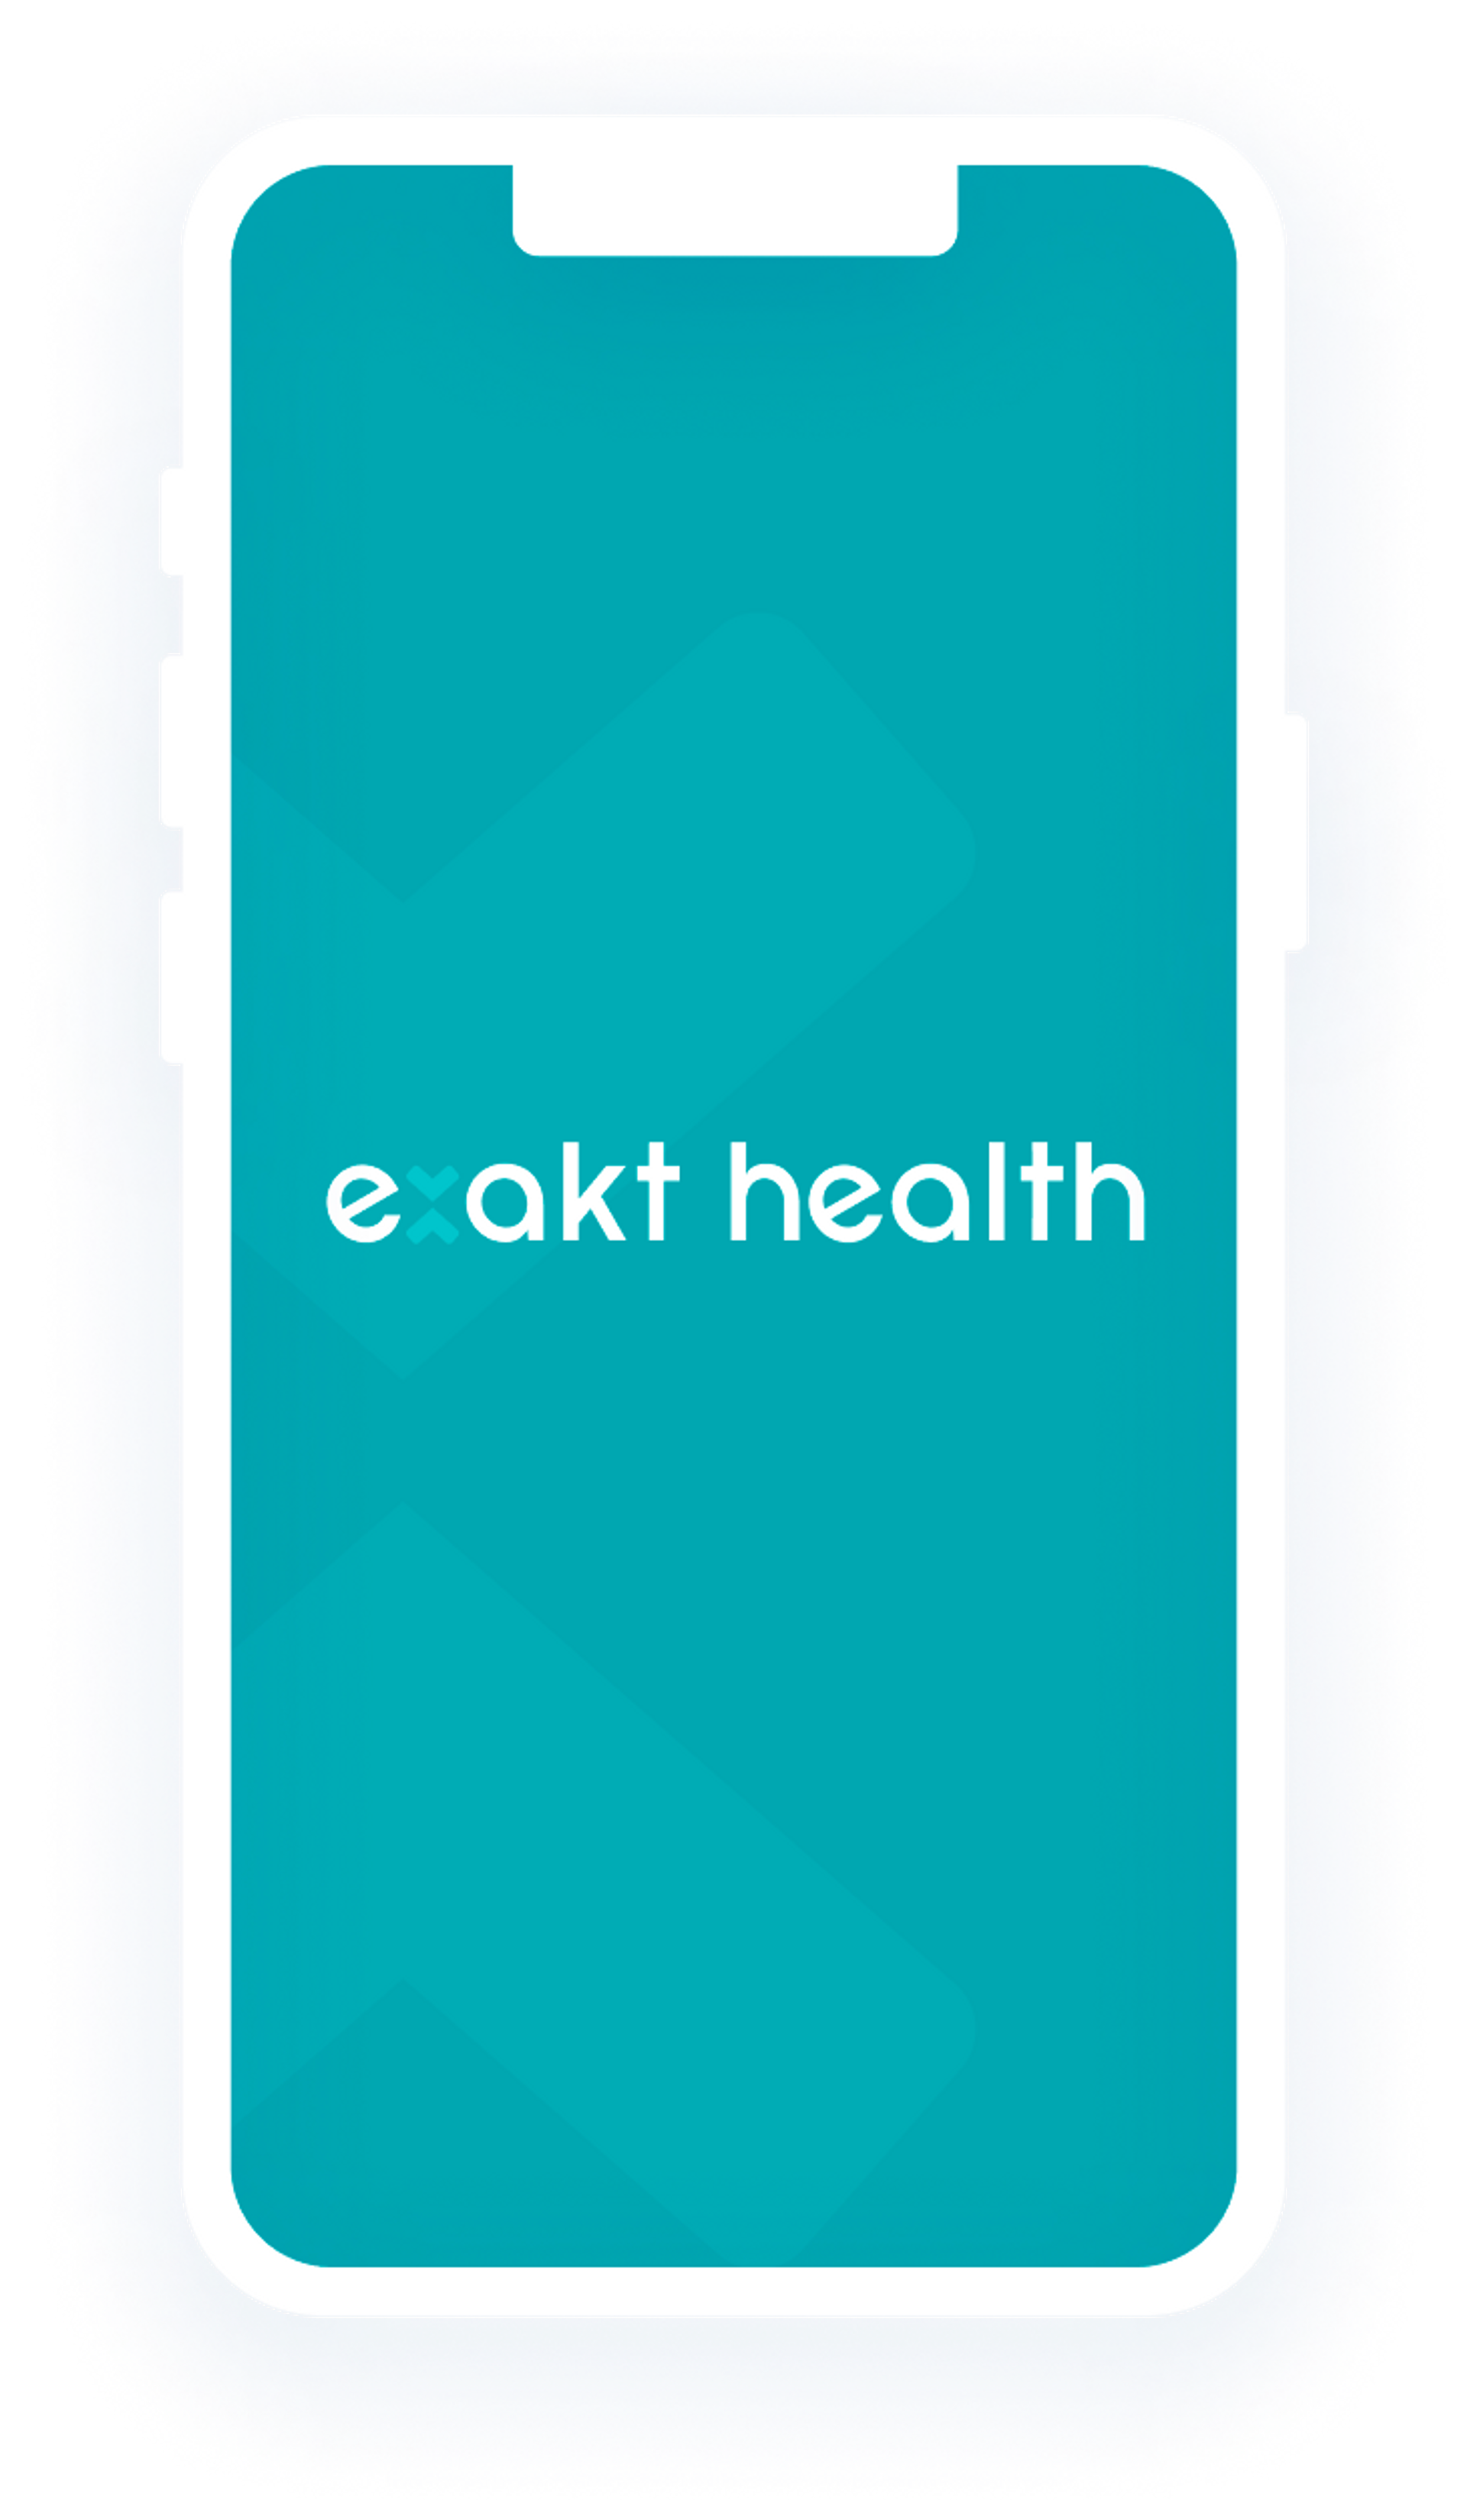 The Exakt Health app